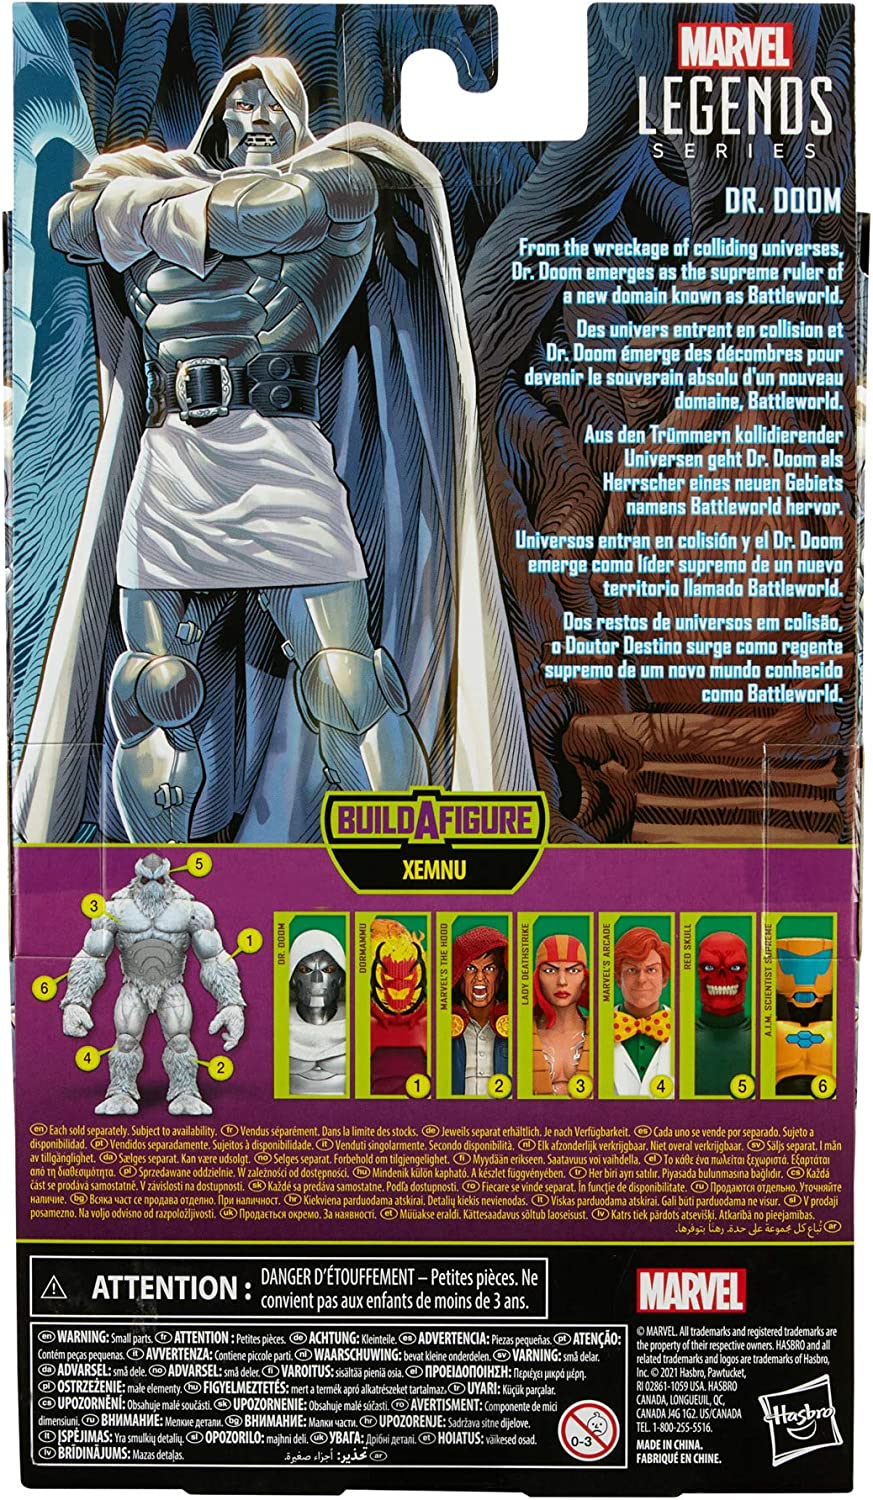 Marvel Hasbro Legends Series 6-inch Dr. Doom Collectible Action Figure